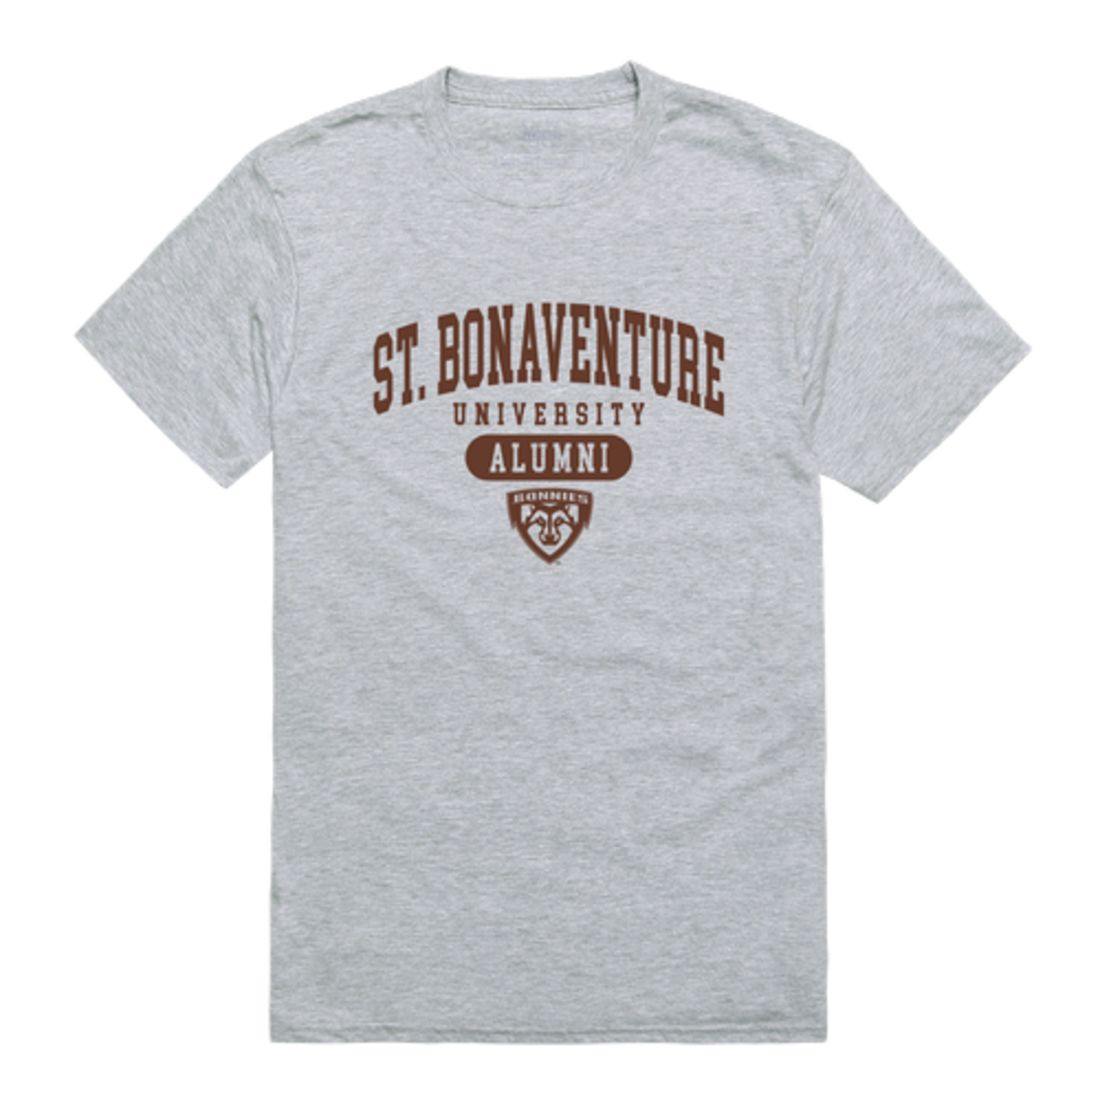 St. Bonaventure Bonnies softball jersey